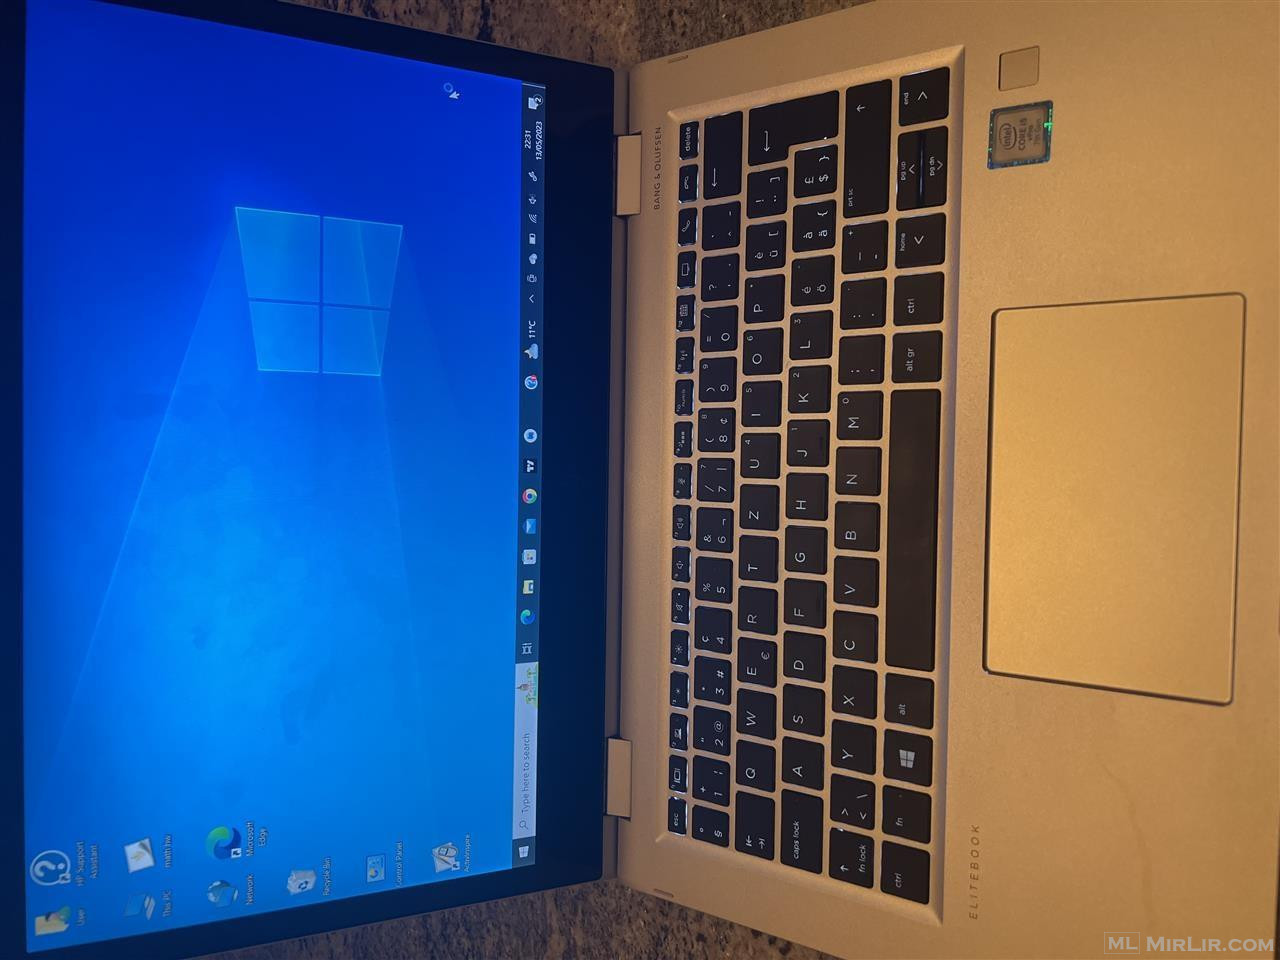 Laptop HP EliteBook X360 1030 G2